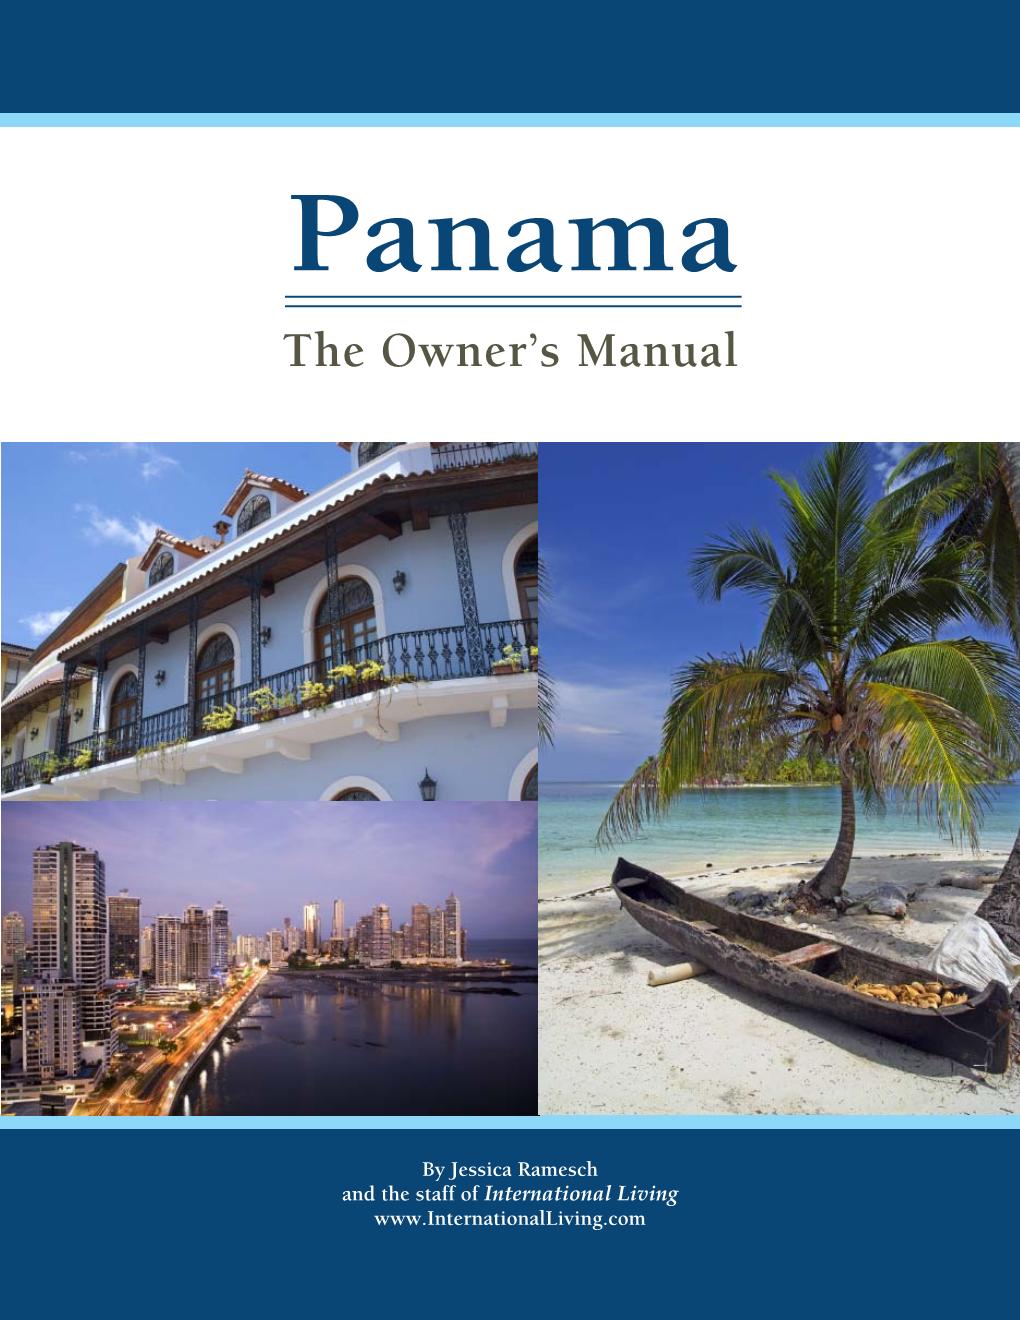 Panama: The Owner’s Manual (2010)